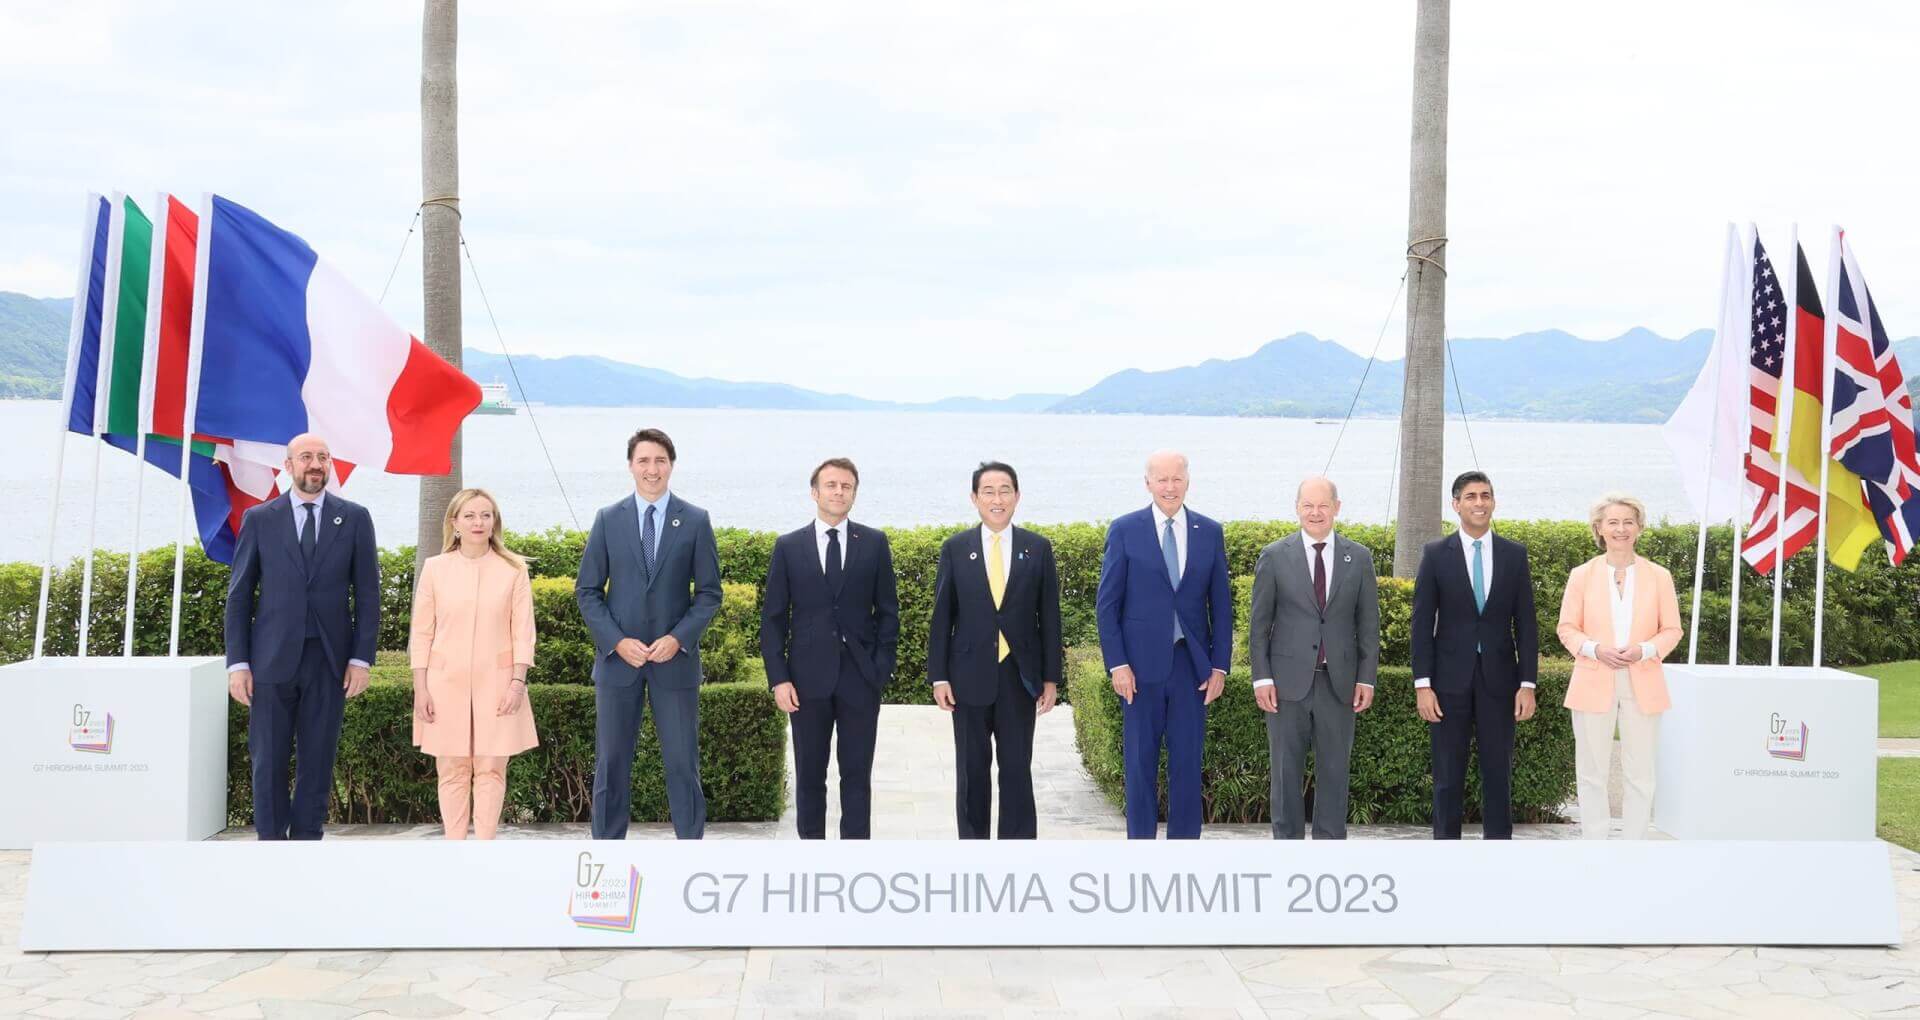 Russia, China Slam G7’s Stance on Ukraine War, South China Sea Following Hiroshima Summit